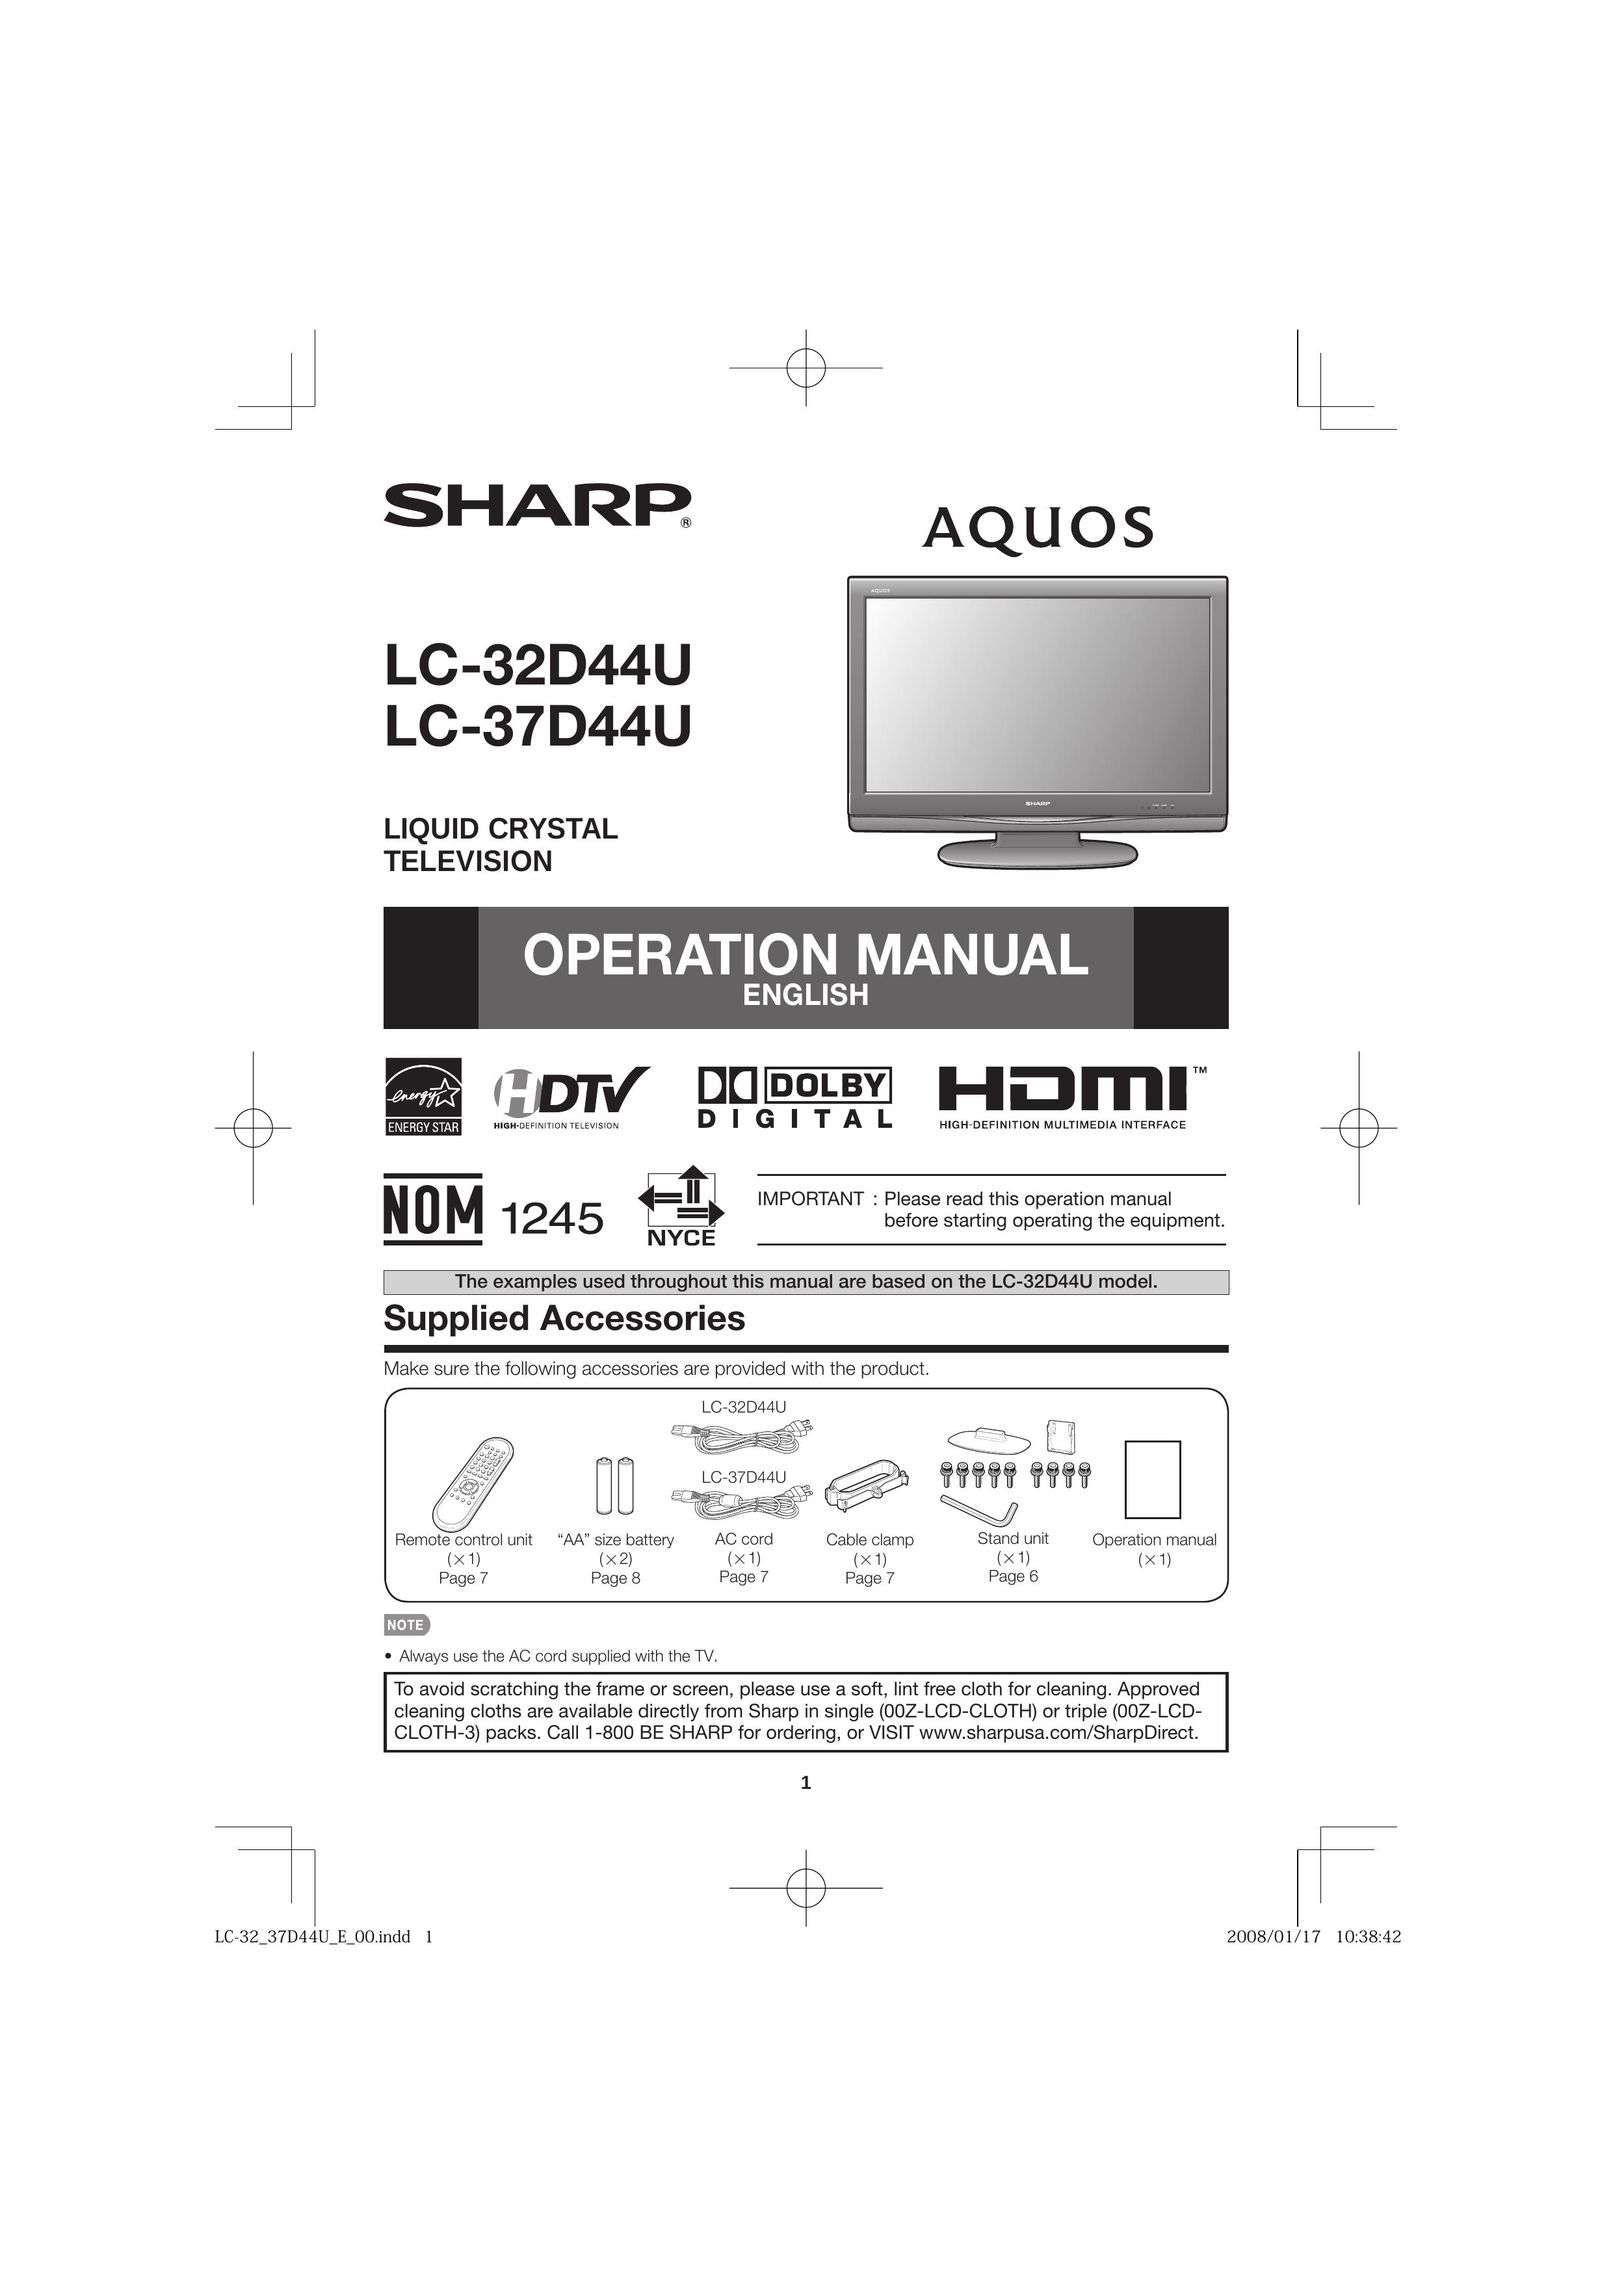 Nintendo LC-32D44U Flat Panel Television User Manual